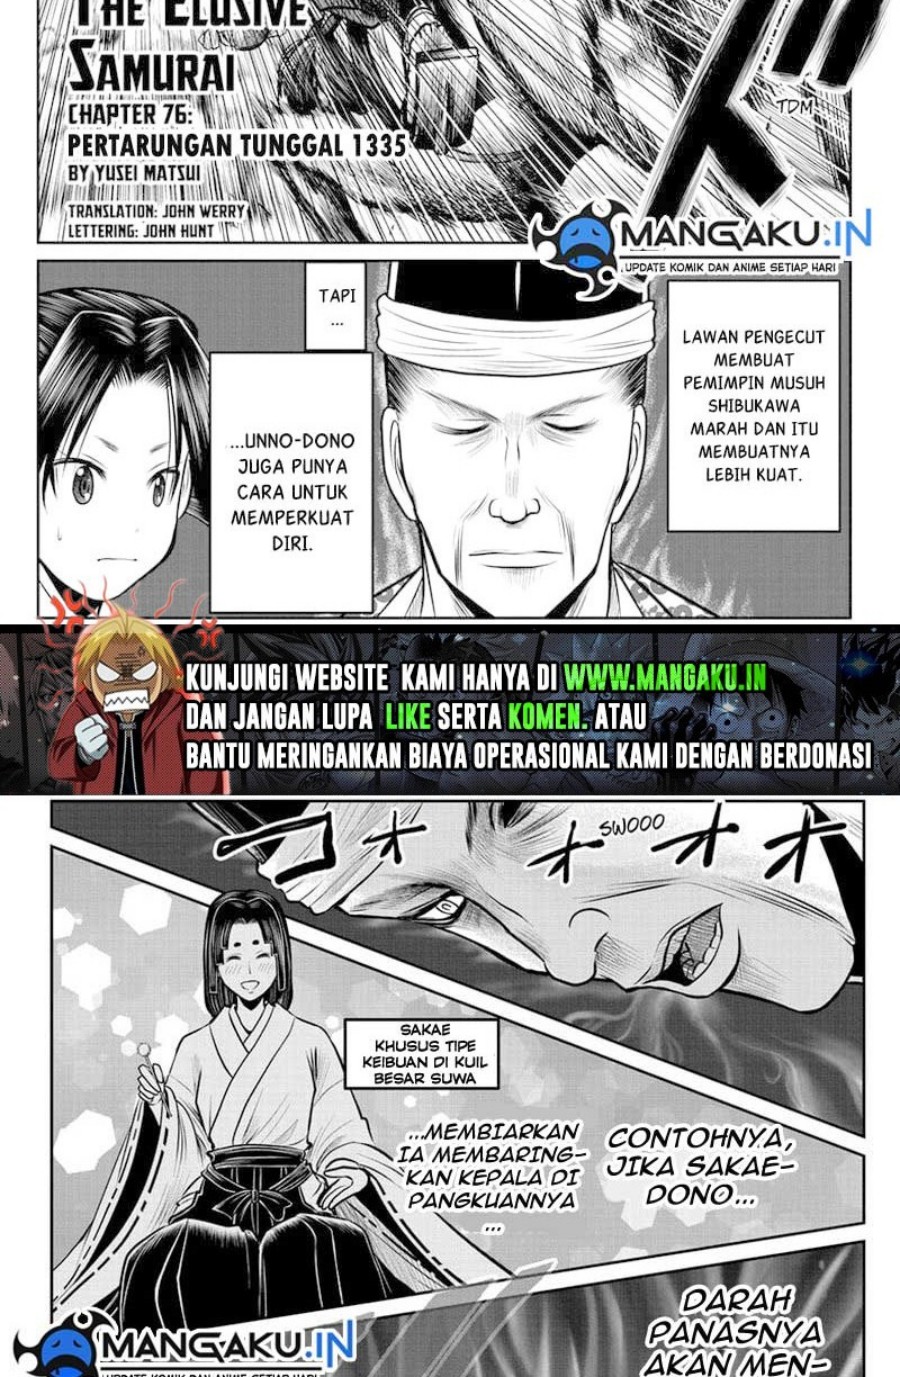 The Elusive Samurai Chapter 76 2